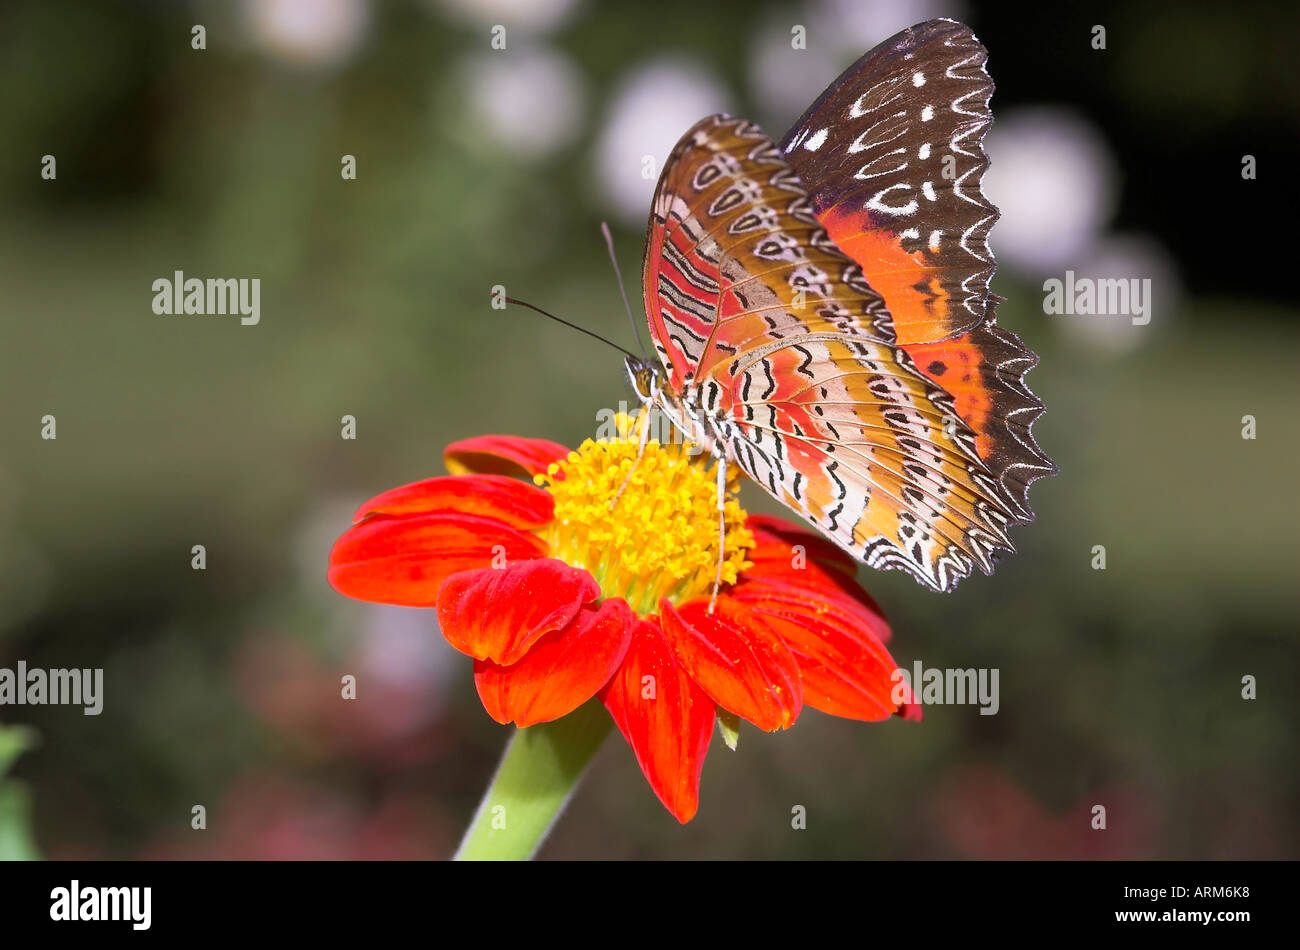 IKA101108 Butterfly Red Lacewing Arunachal Pradesh India Stock Photo